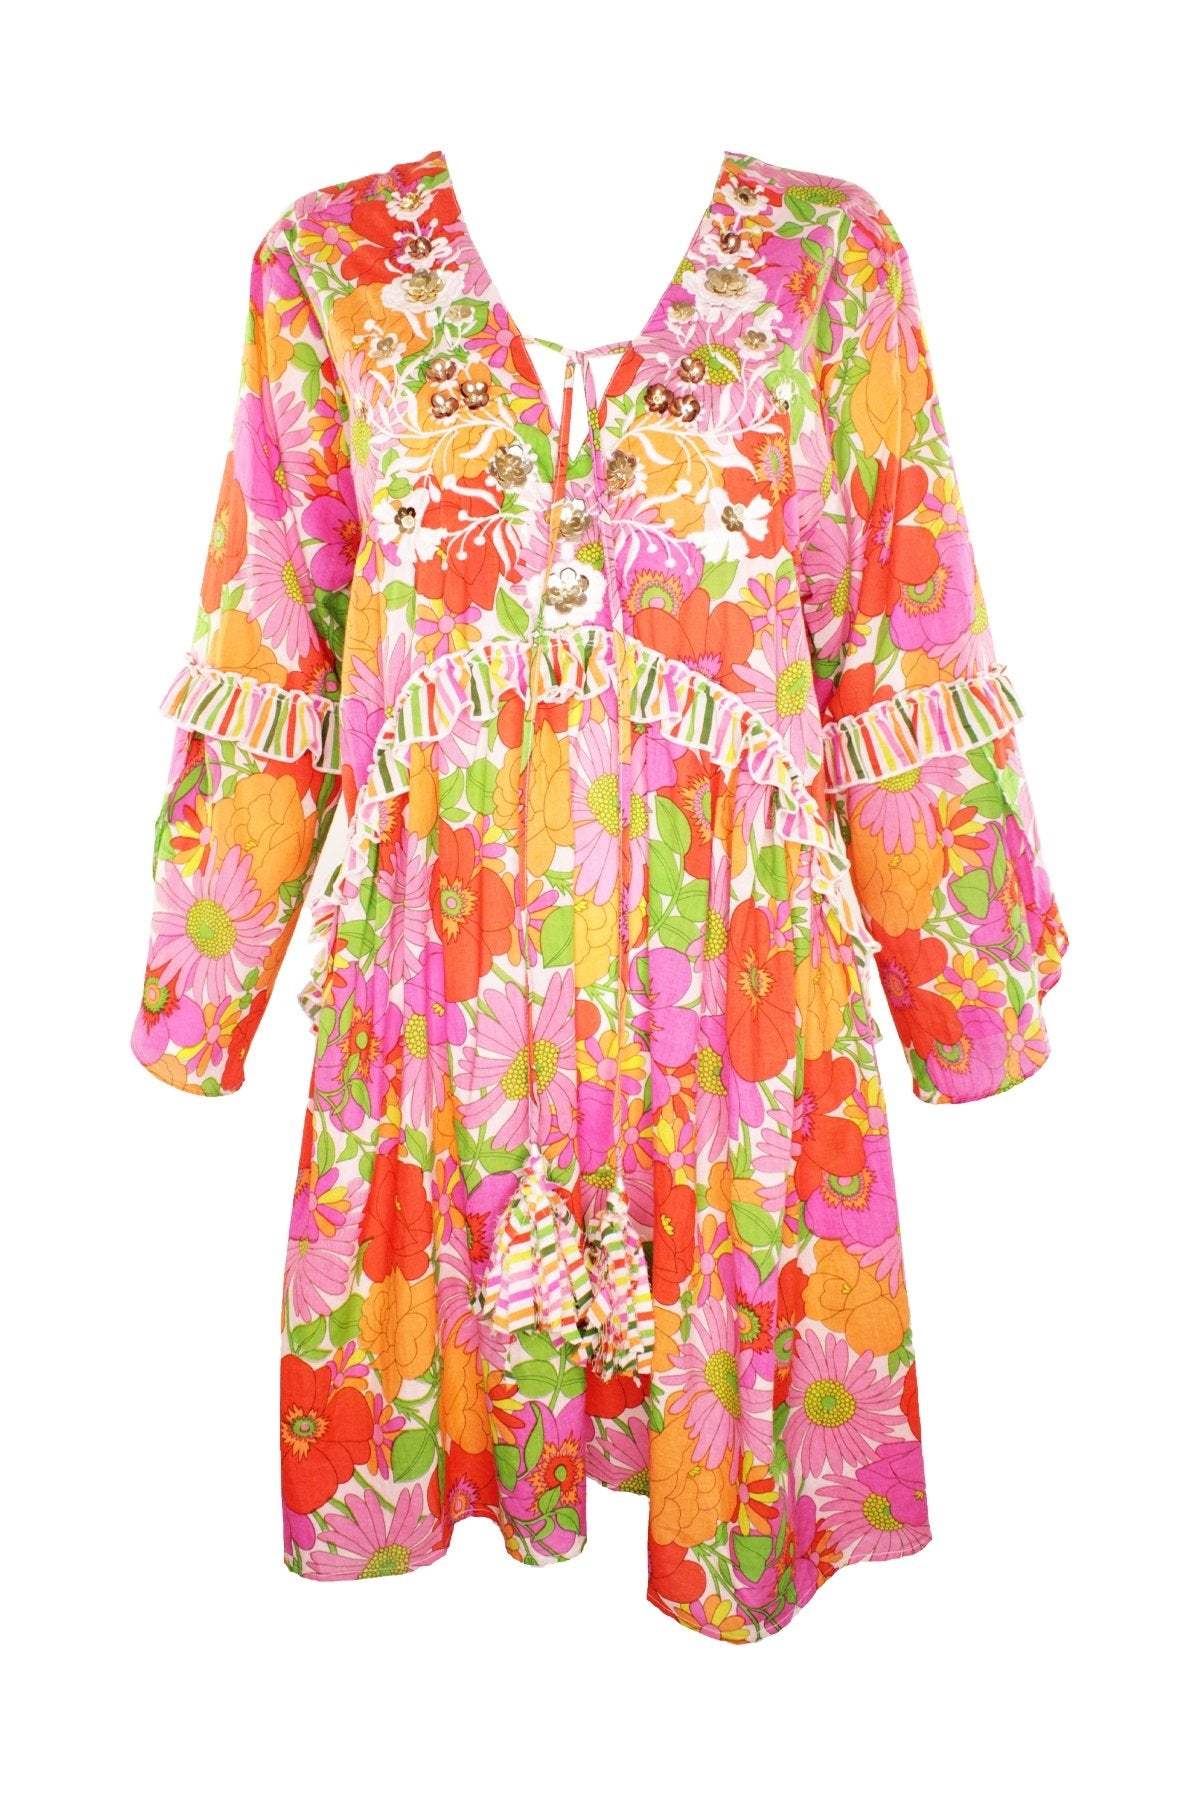 Abba Dress in Neon - shop-olivia.com